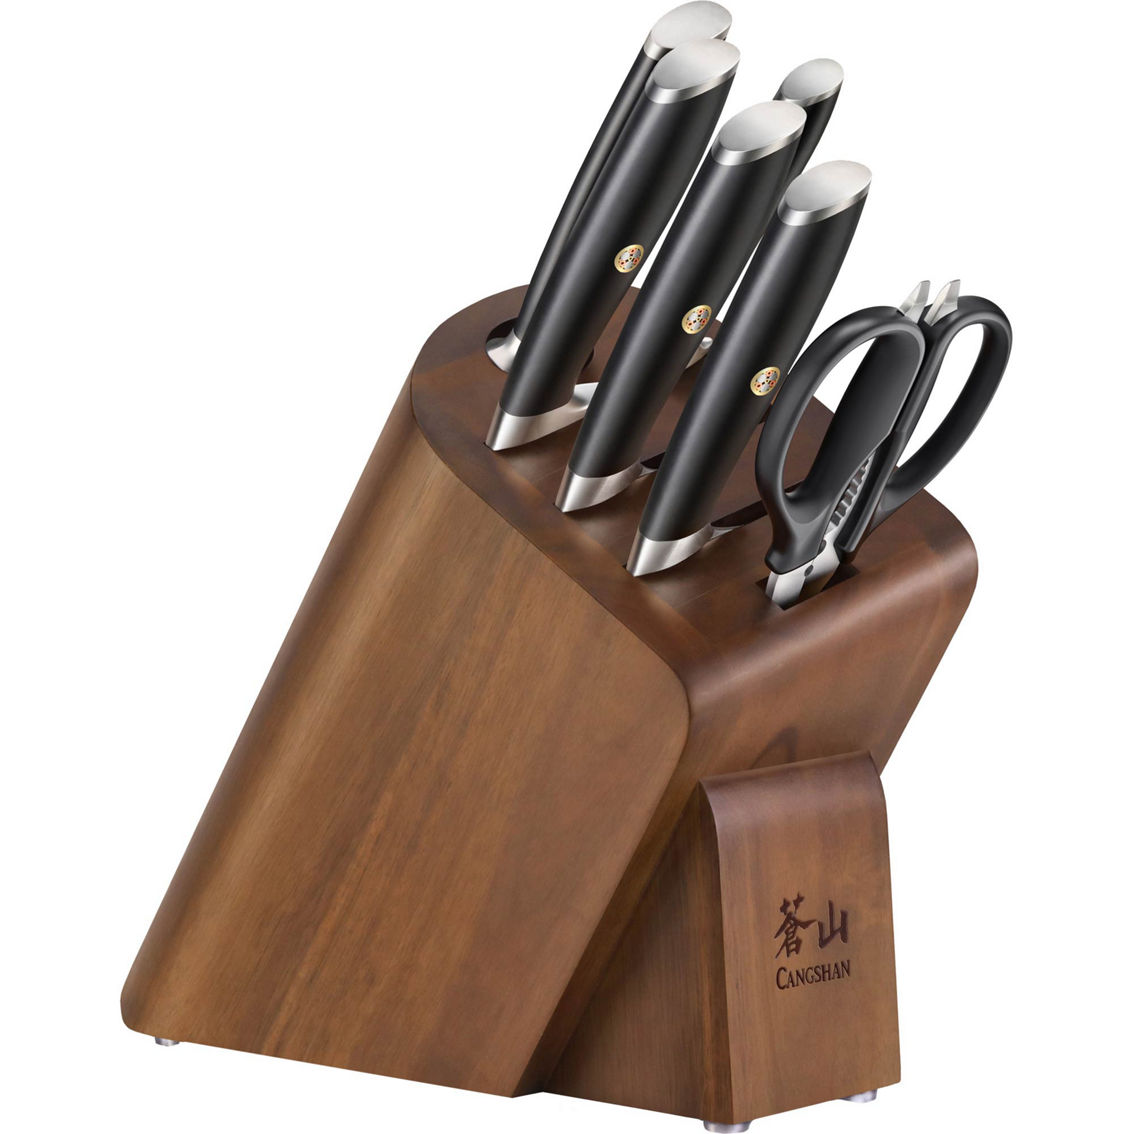 Cangshan Cutlery L Series Cleaver Knife Block 7 pc. Set, Black - Image 8 of 9